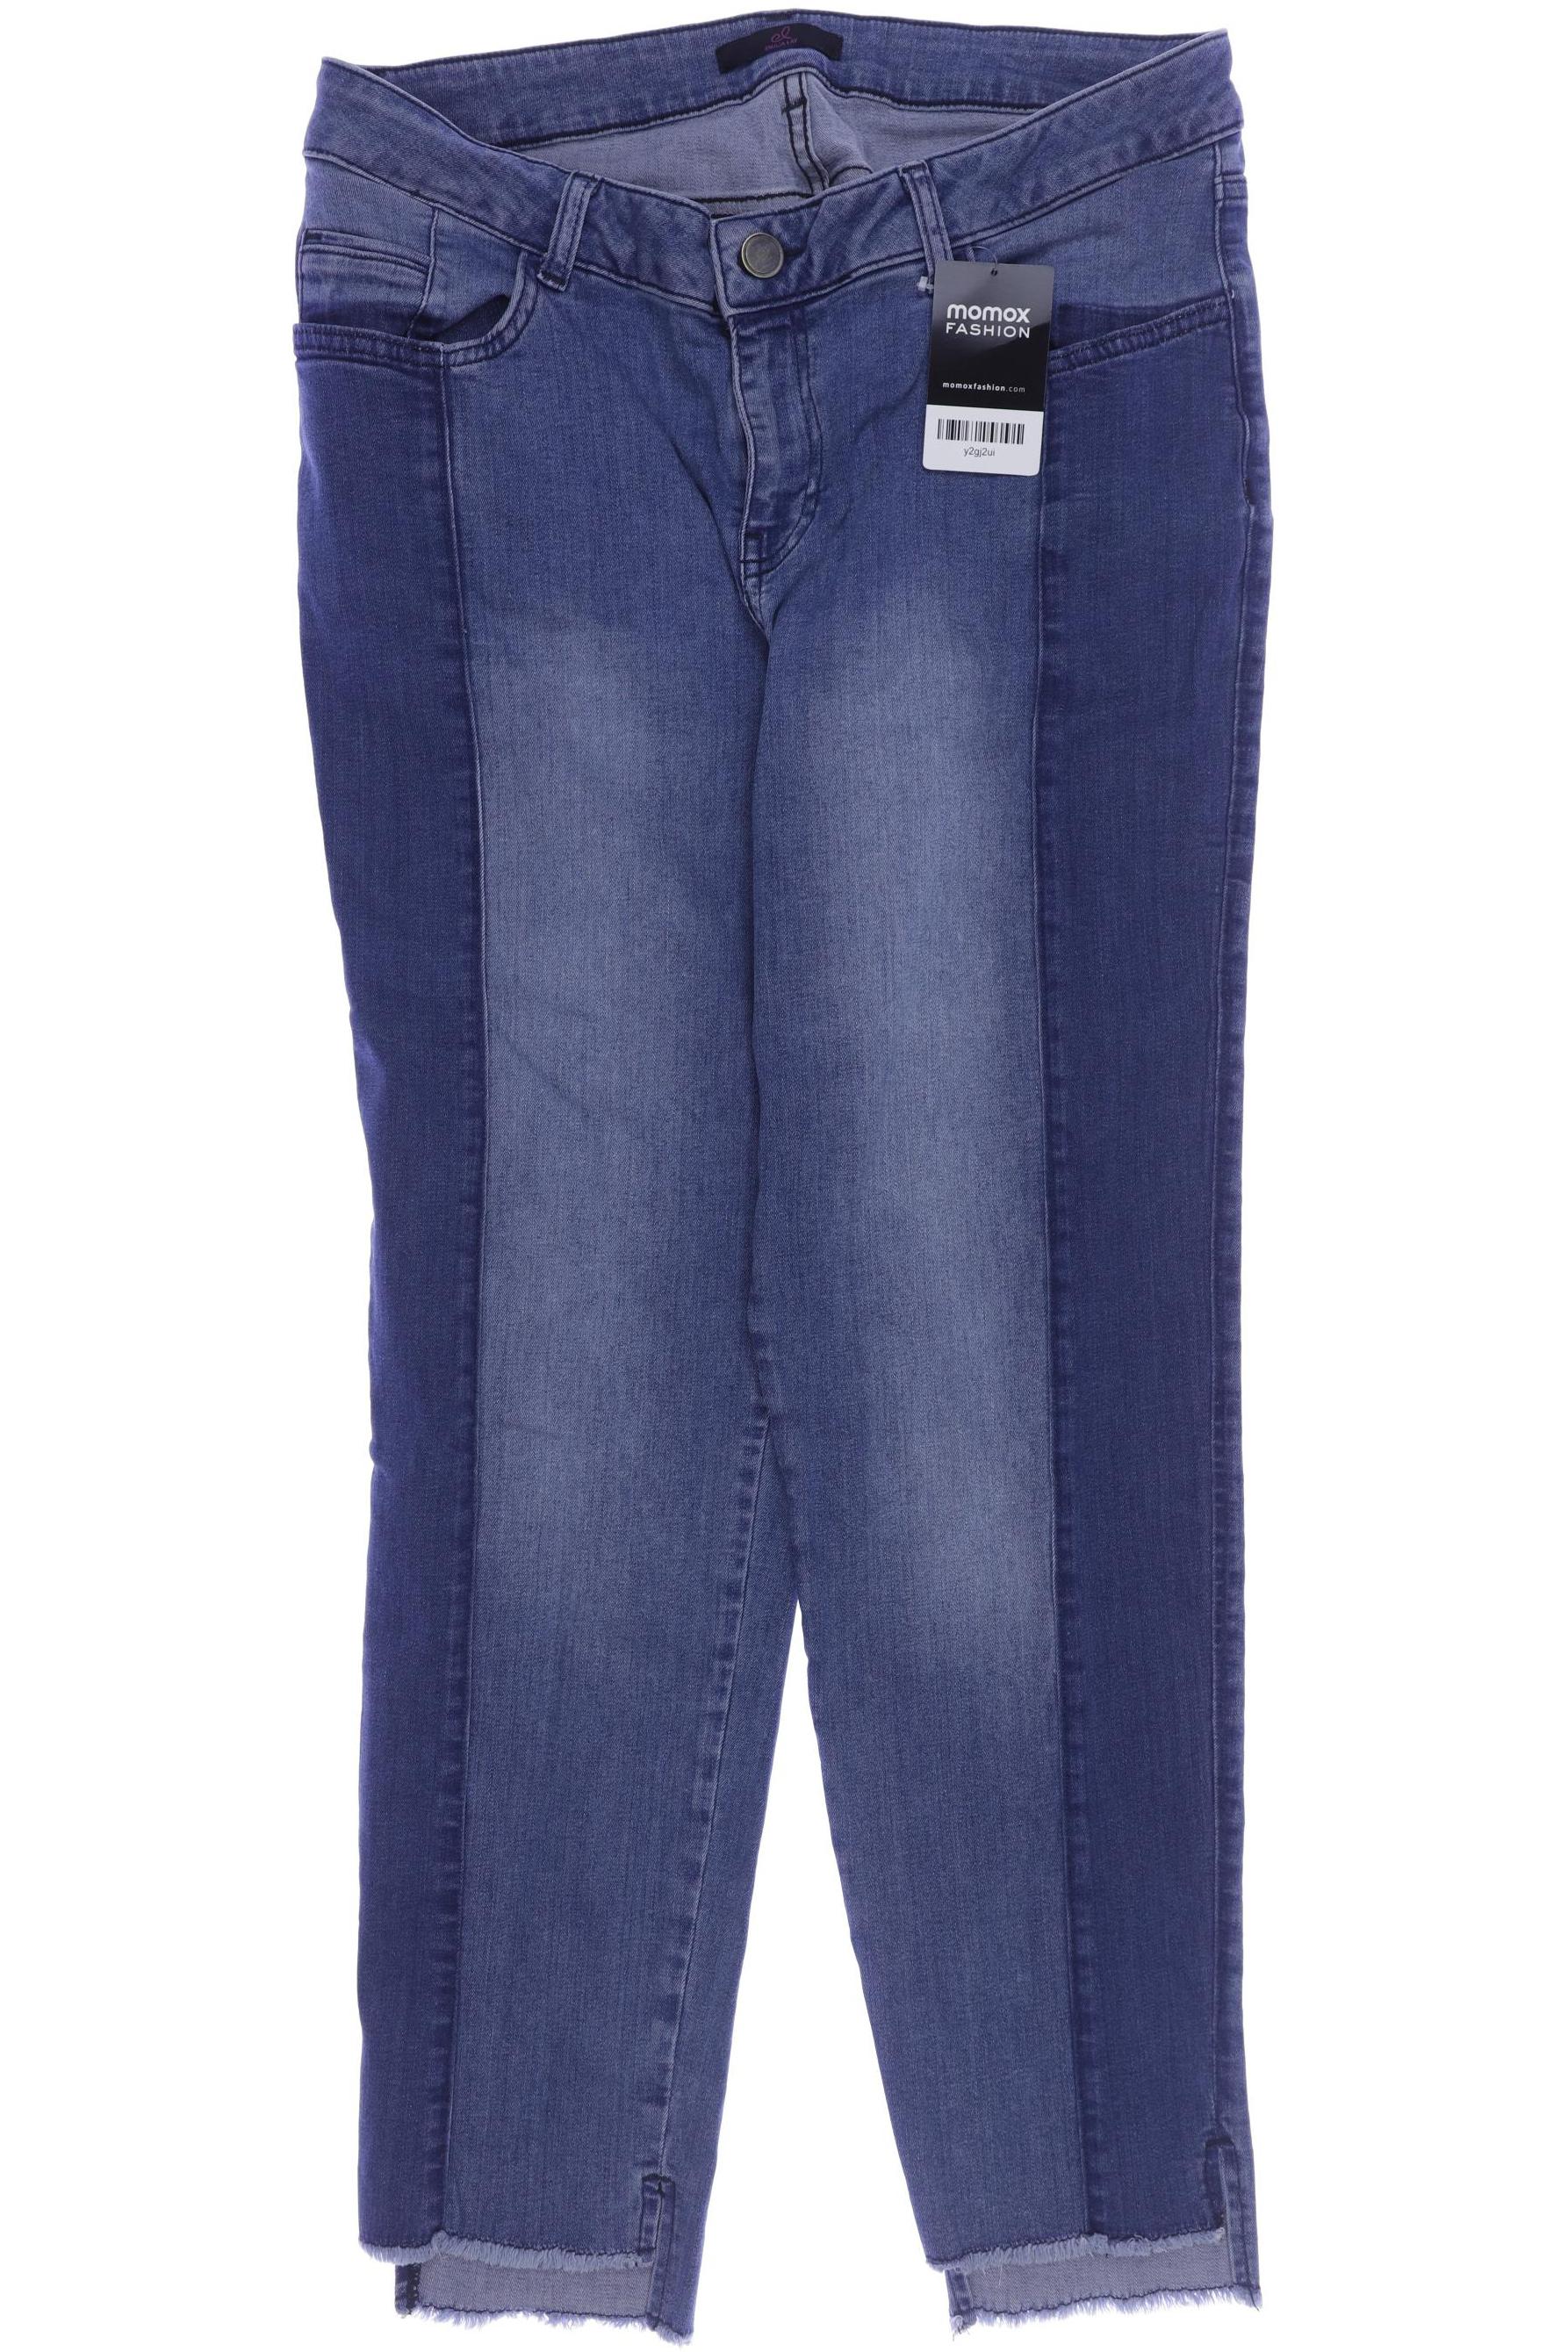 Emilia Lay Damen Jeans, blau, Gr. 42 von Emilia Lay